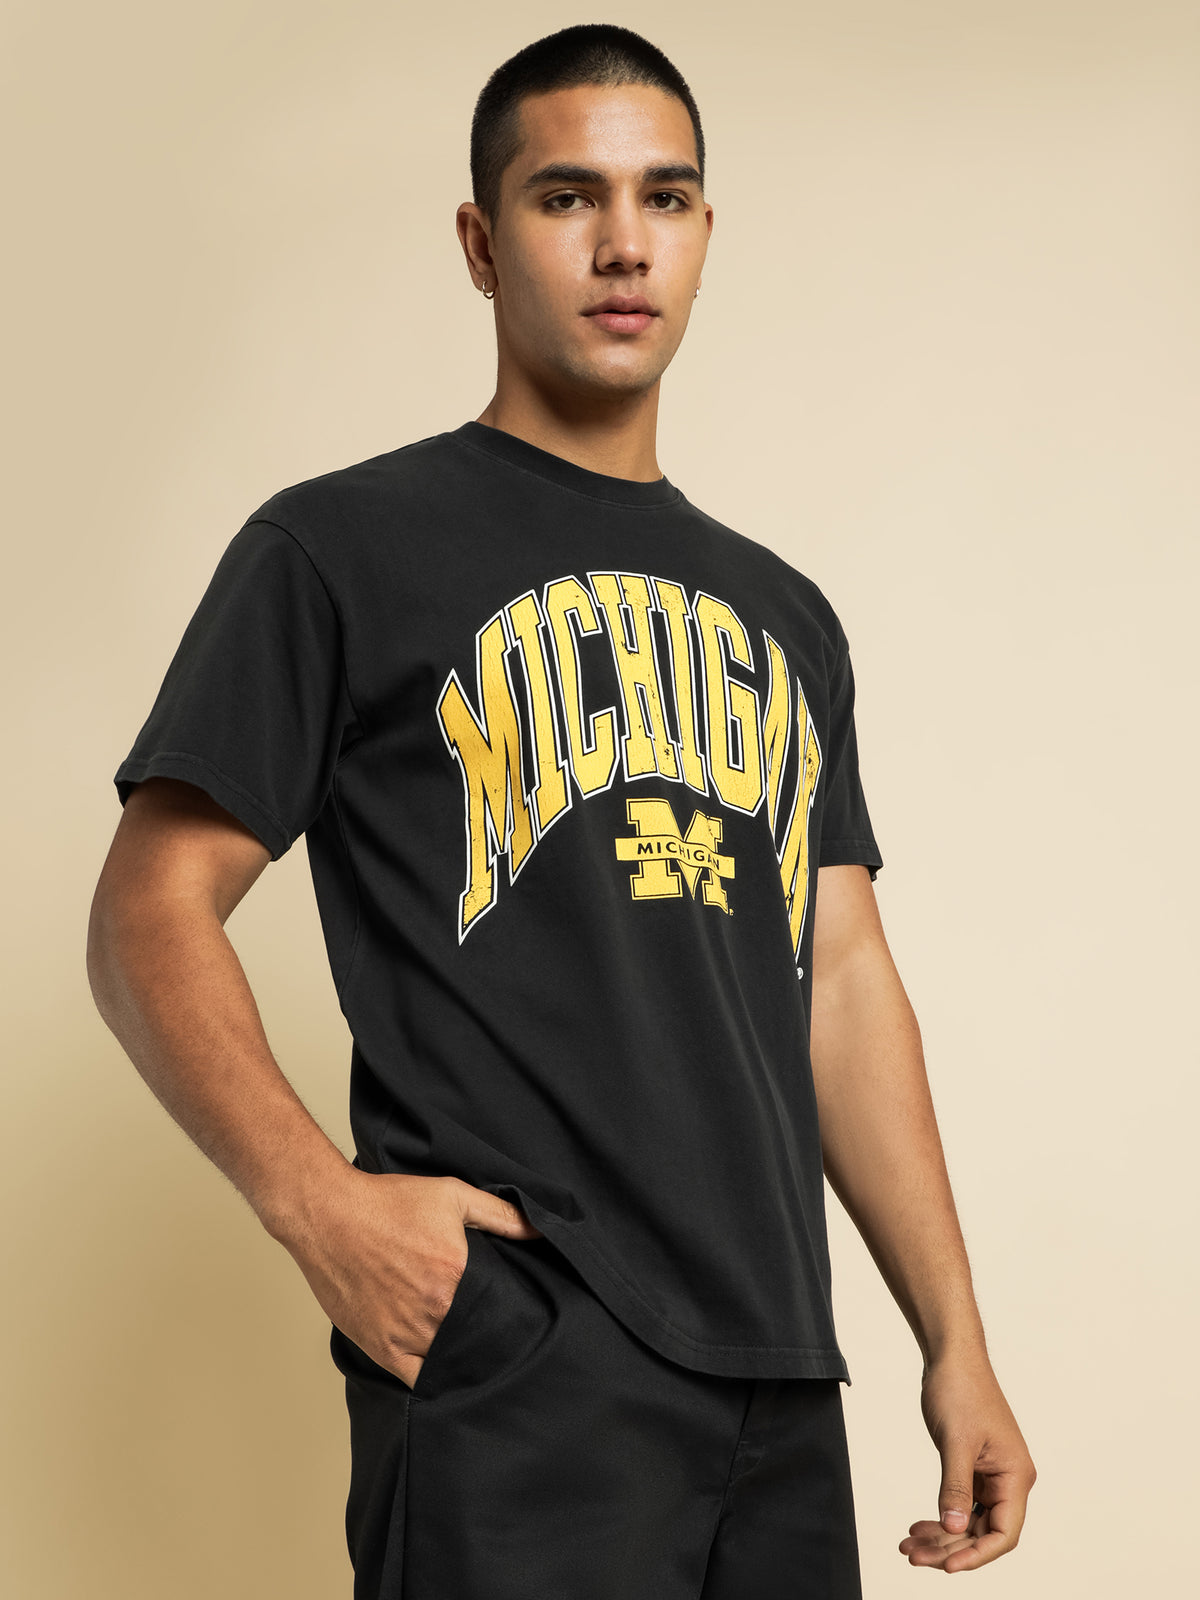 University of Michigan T-Shirt in Vintage Black